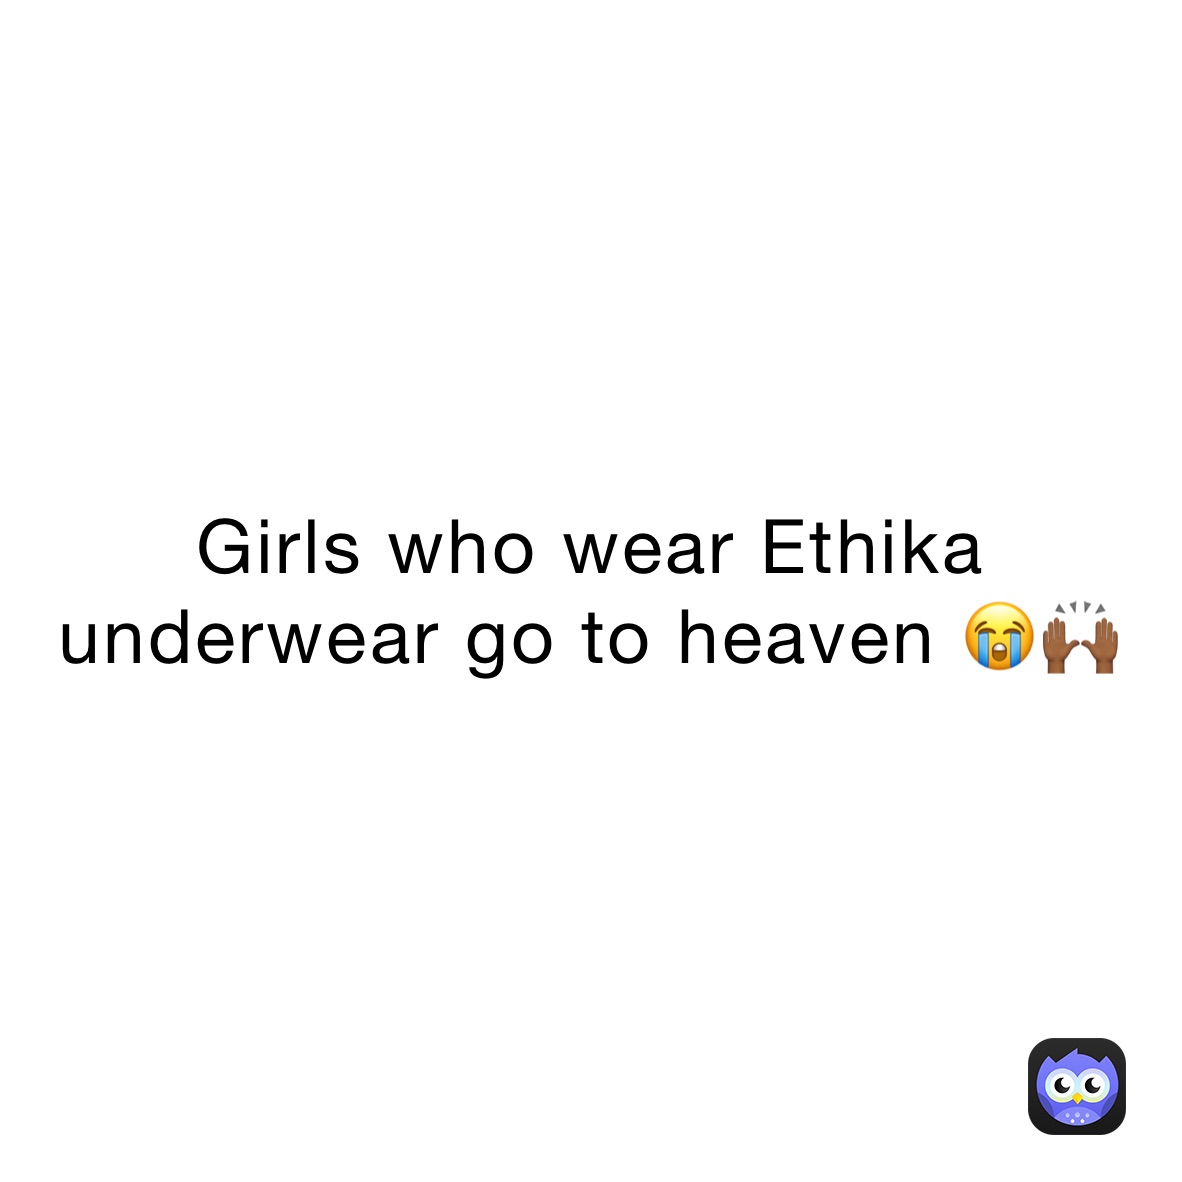 How many people like Ethika panties? - Quora